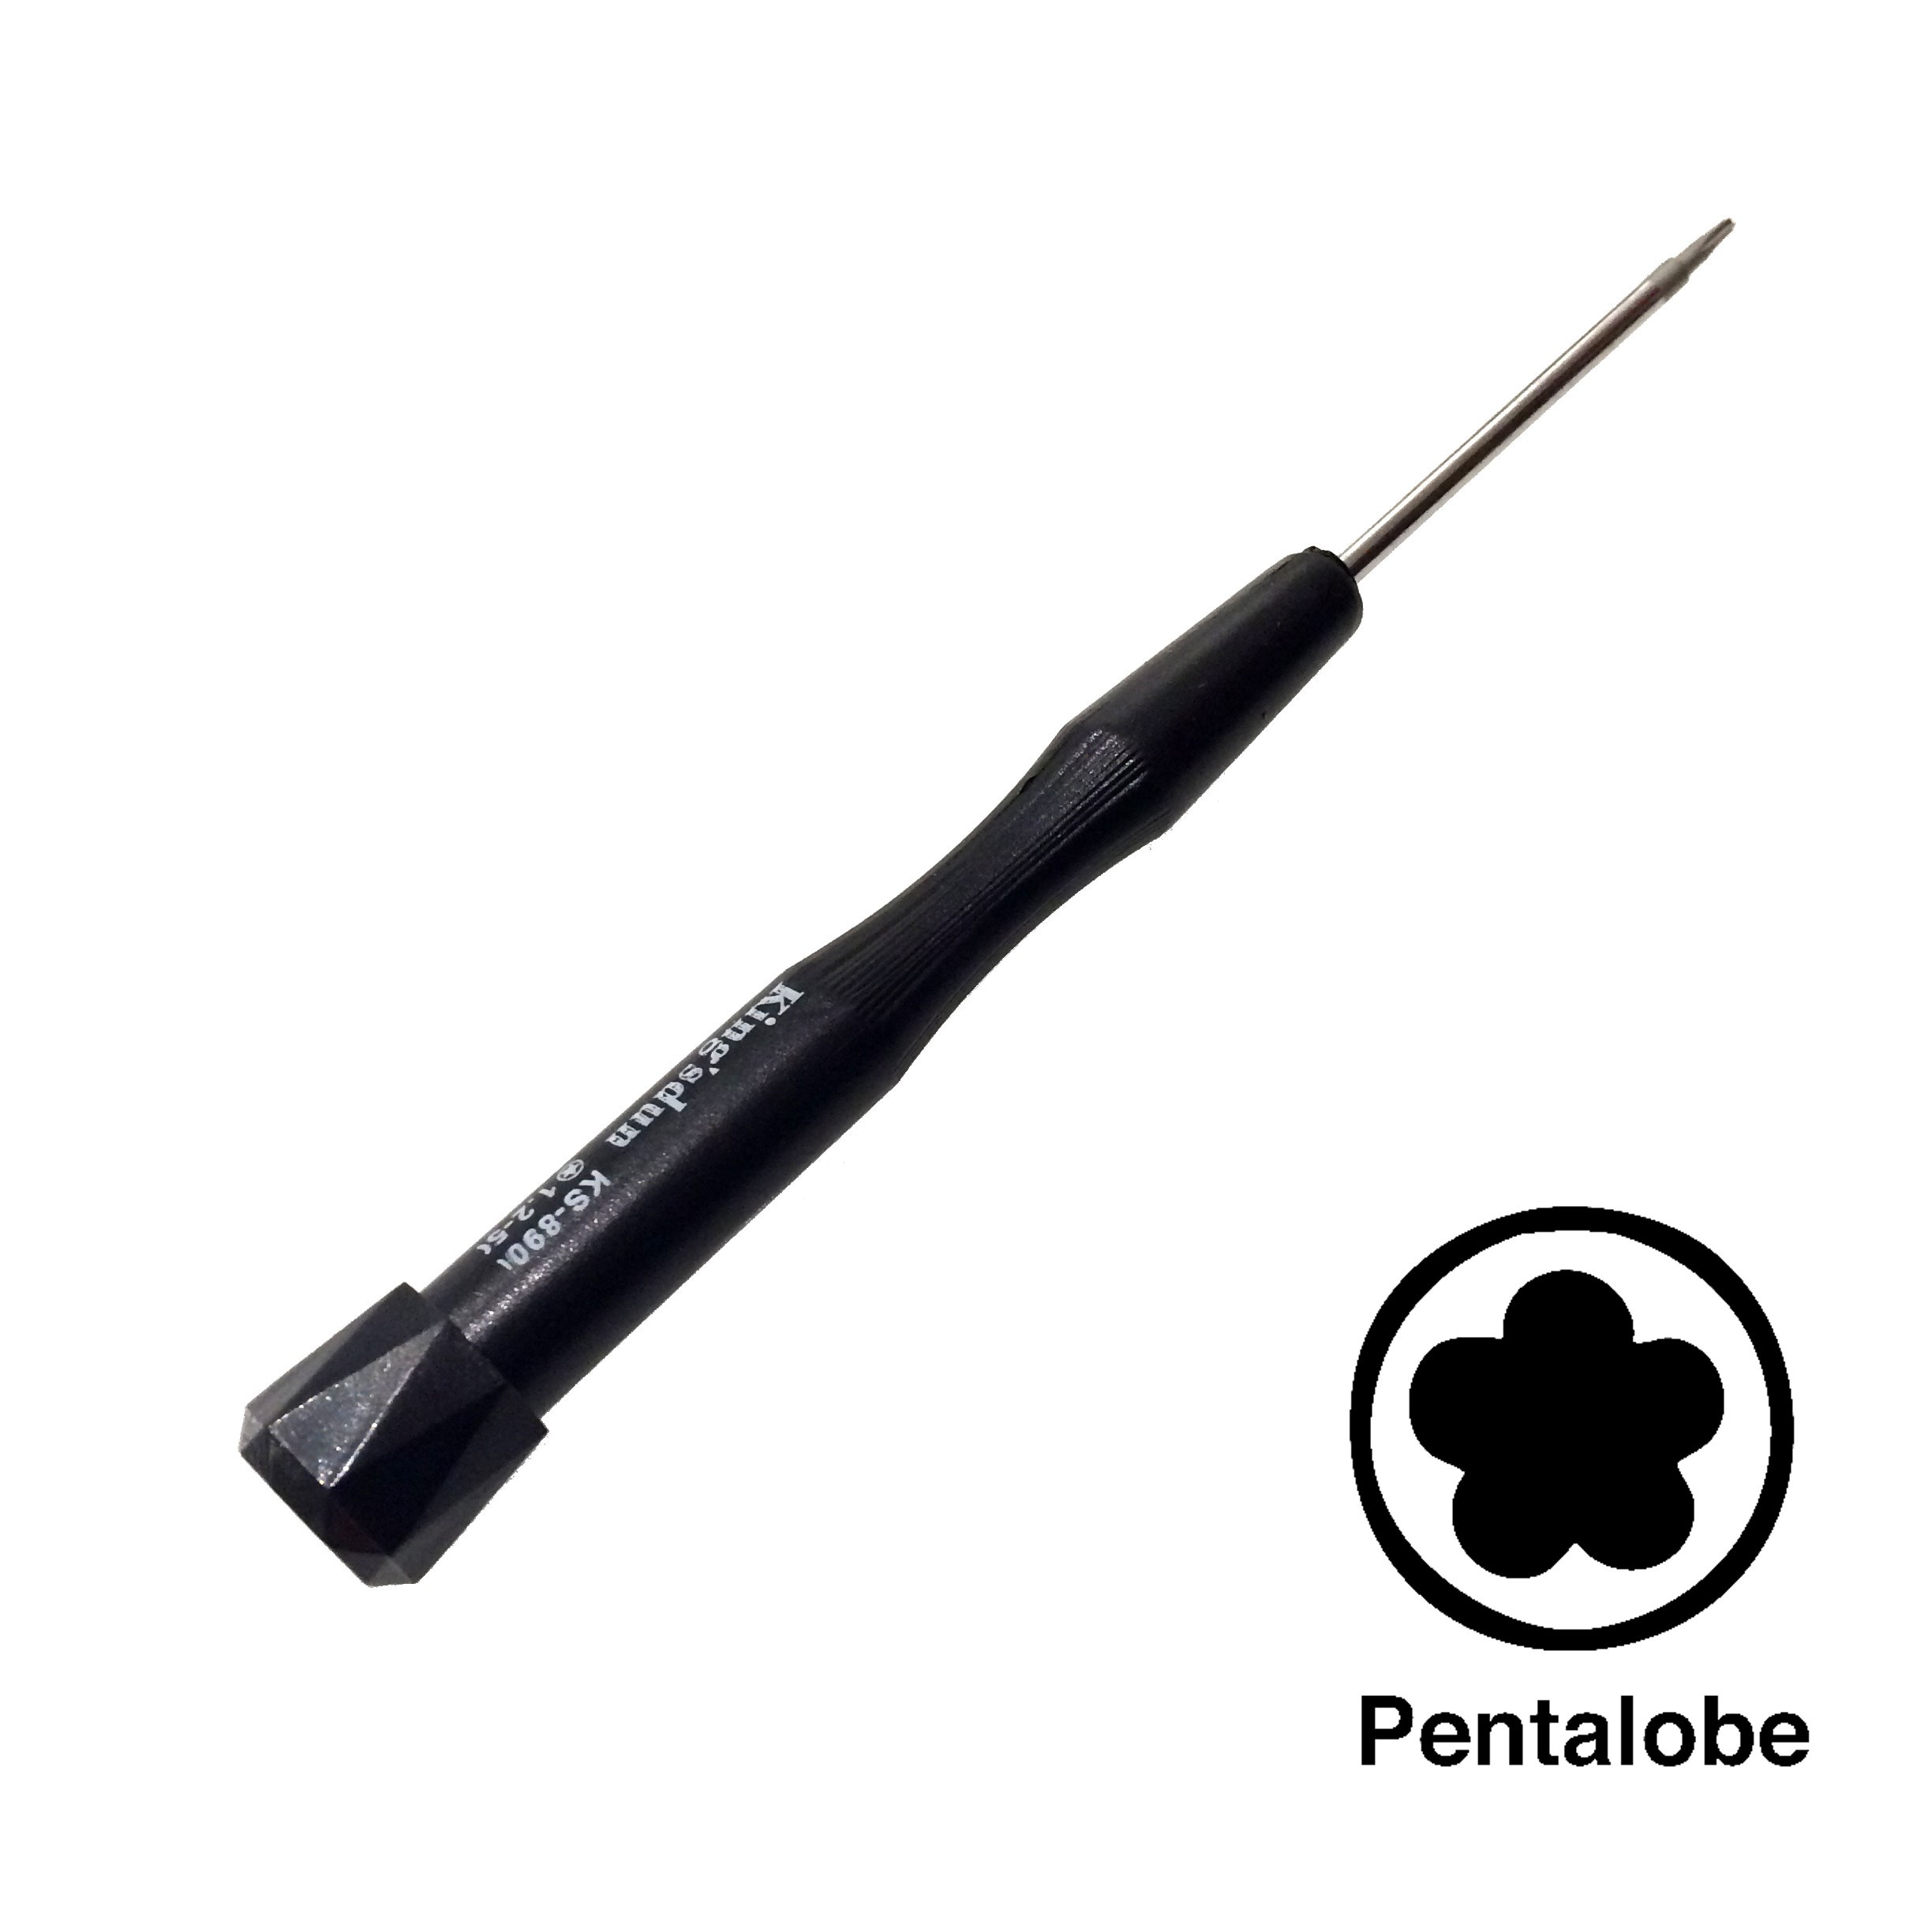 pentalobe screwdriver